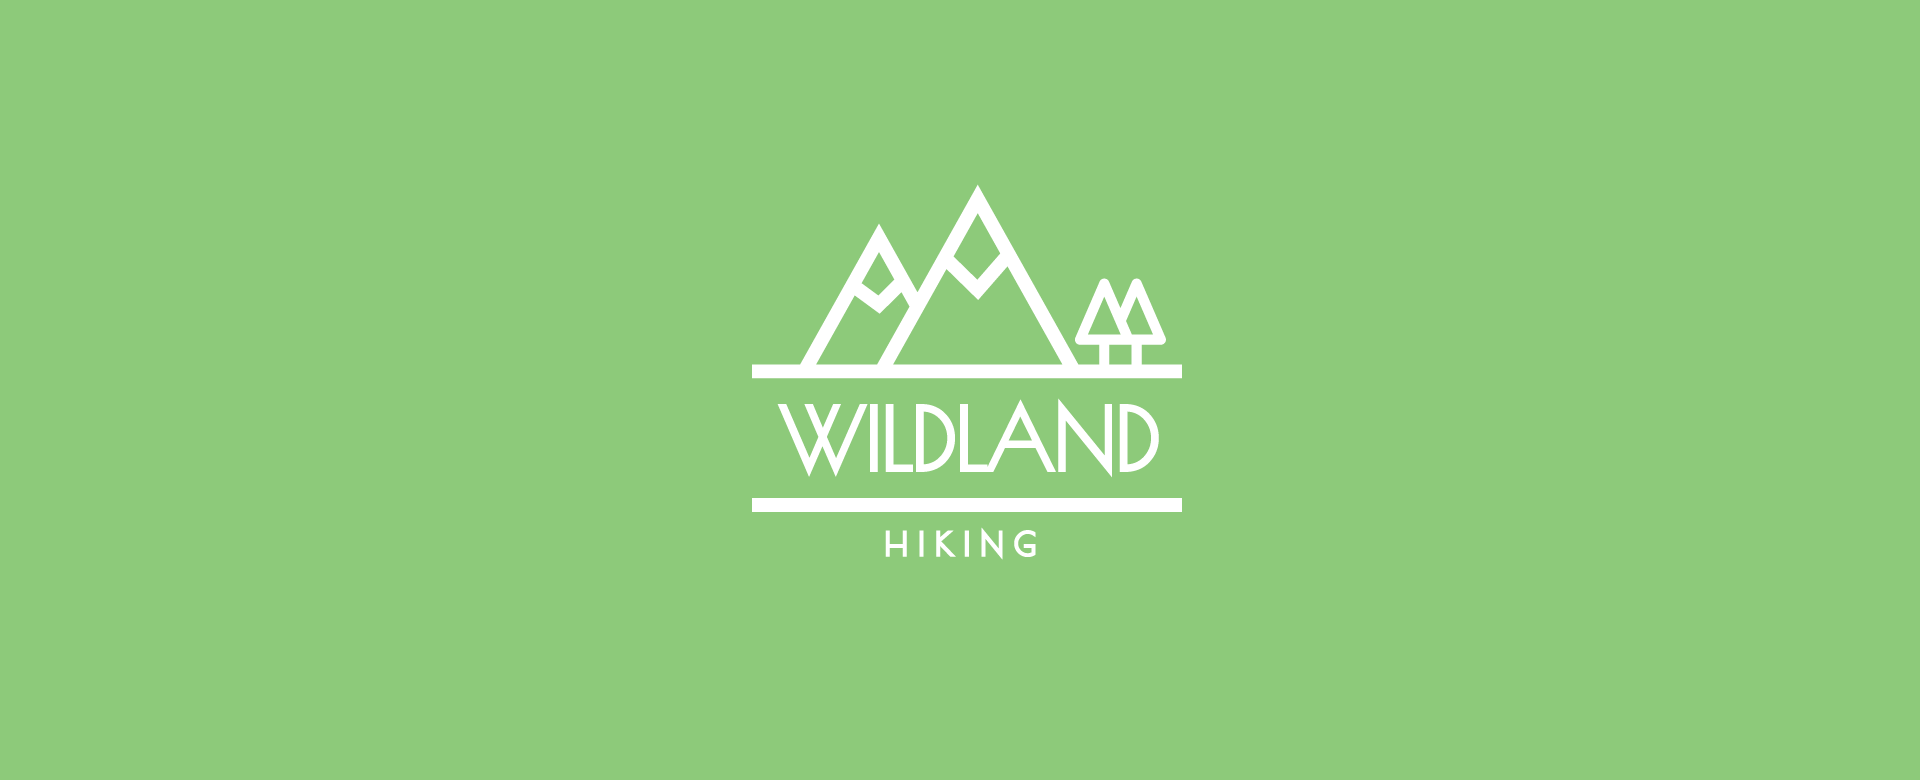 wildland logo